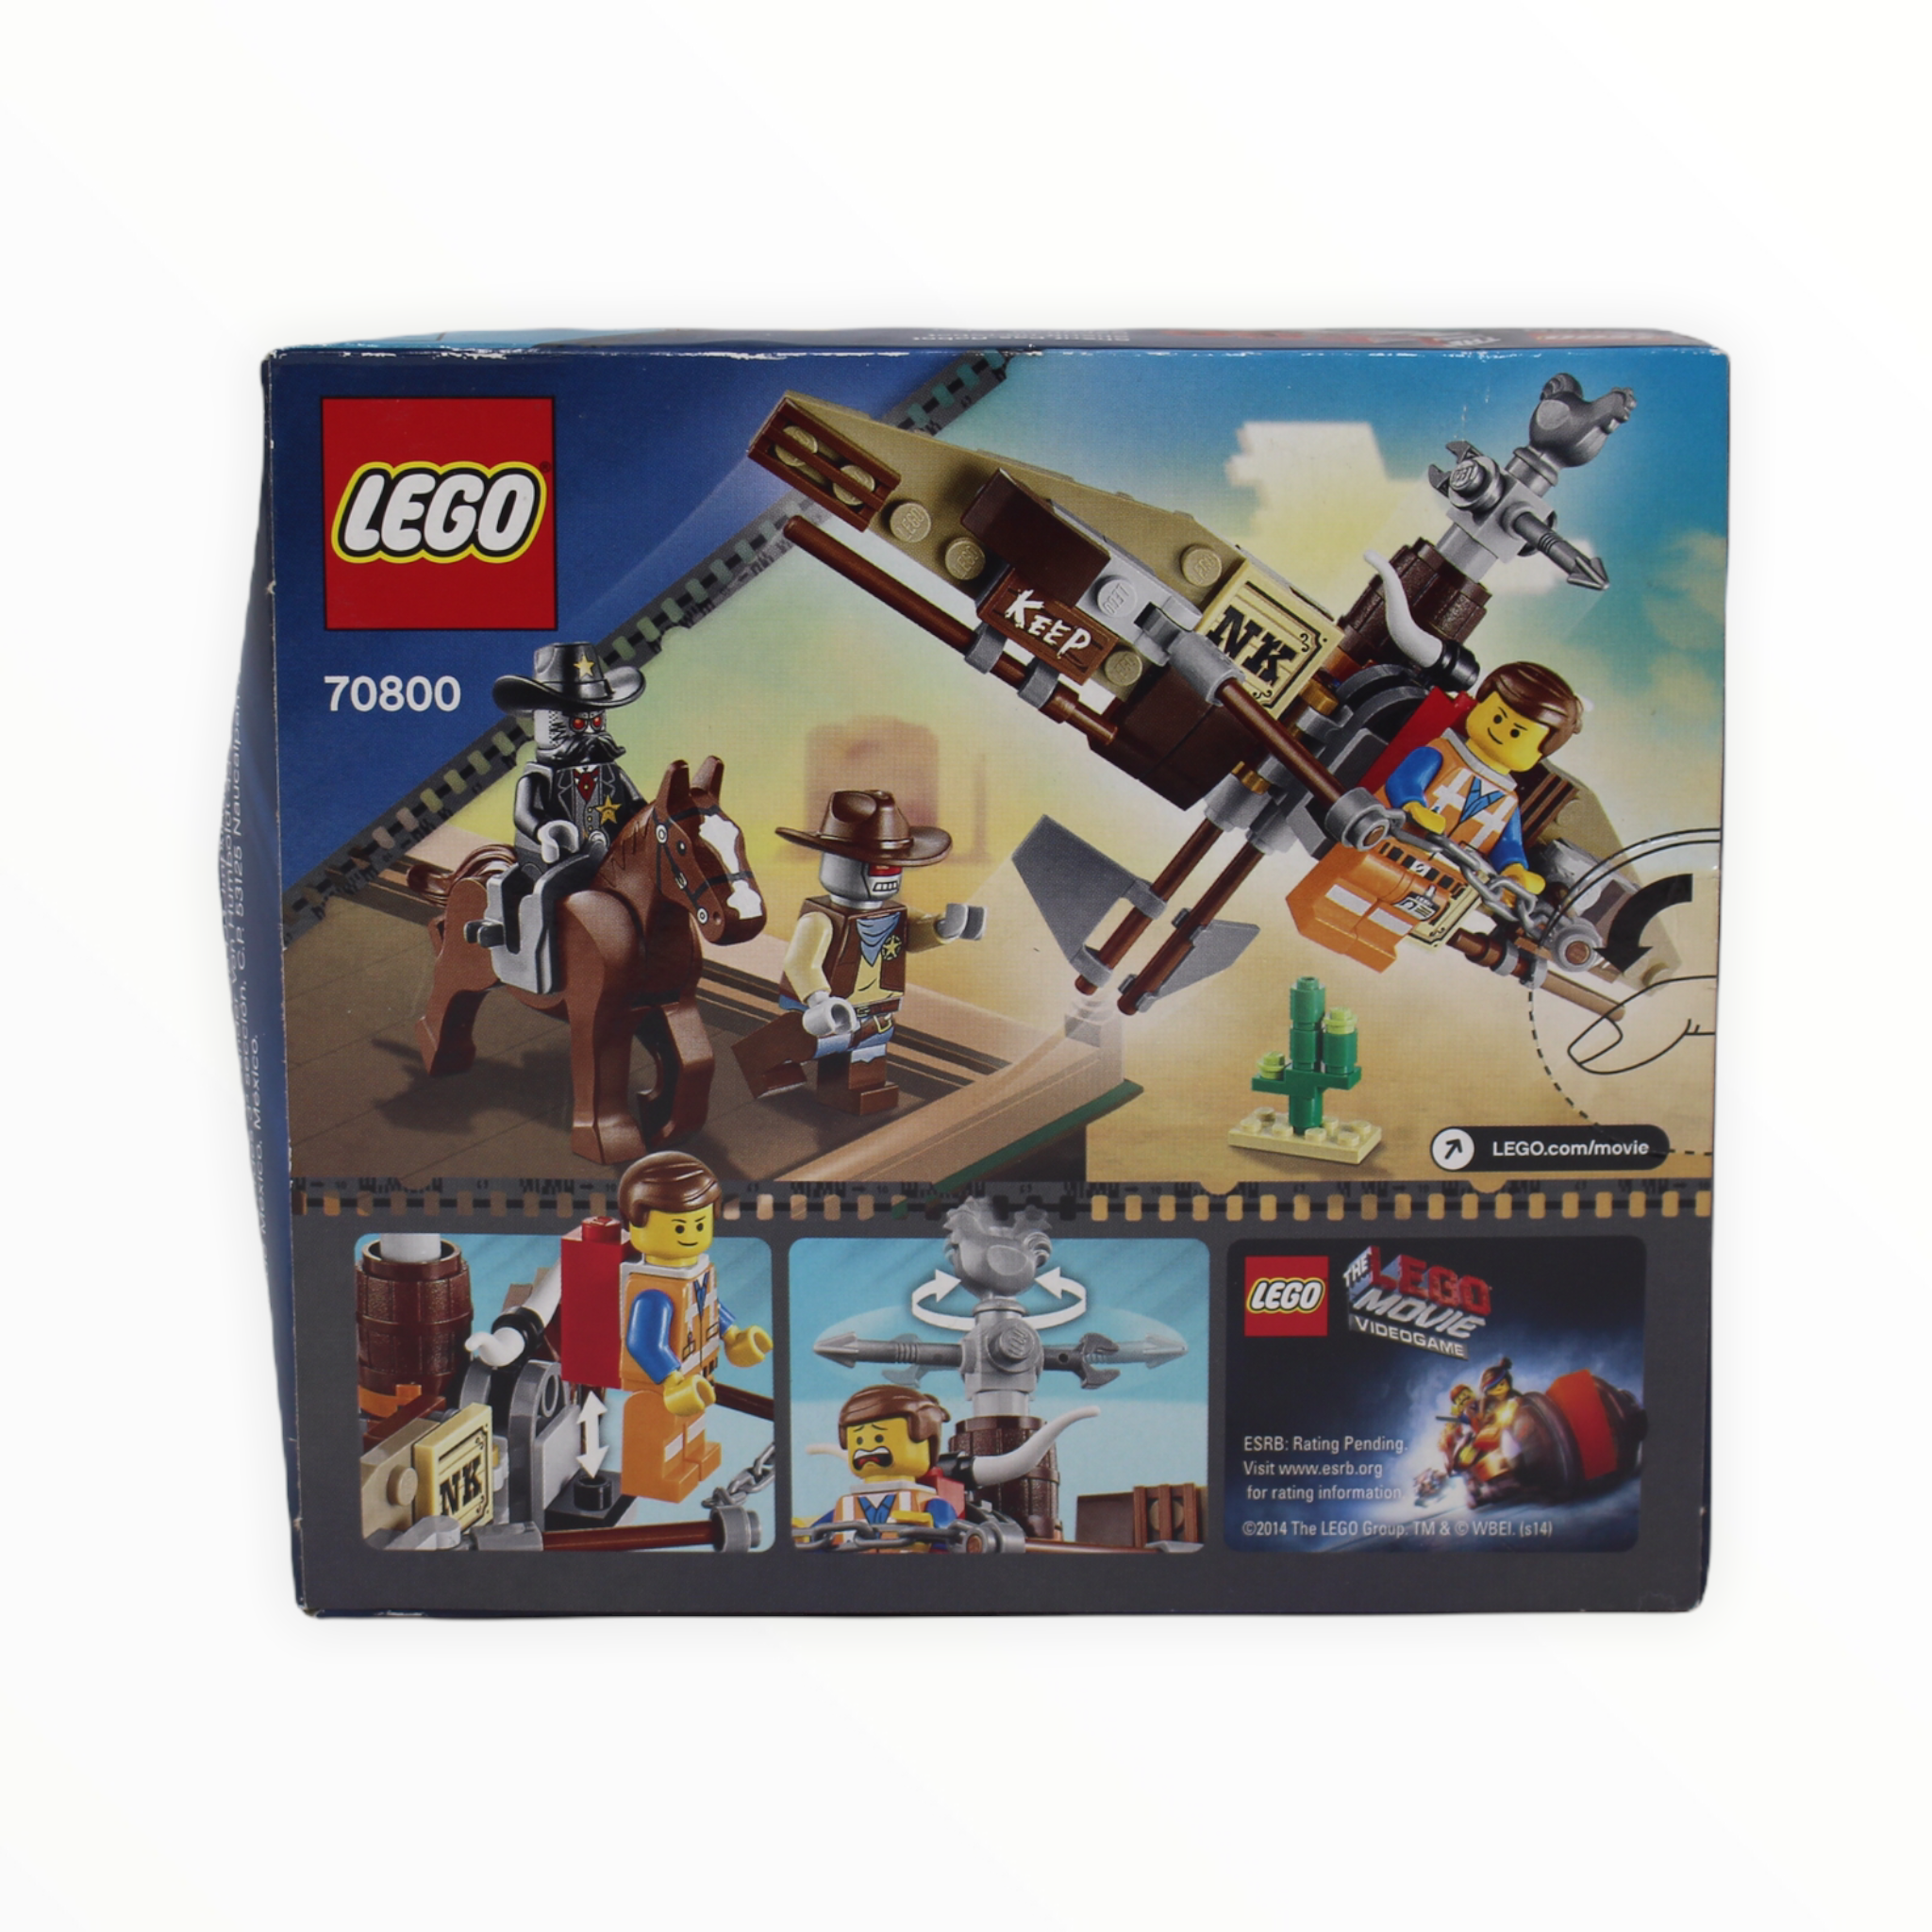 Retired Set 70800 The LEGO Movie Getaway Glider